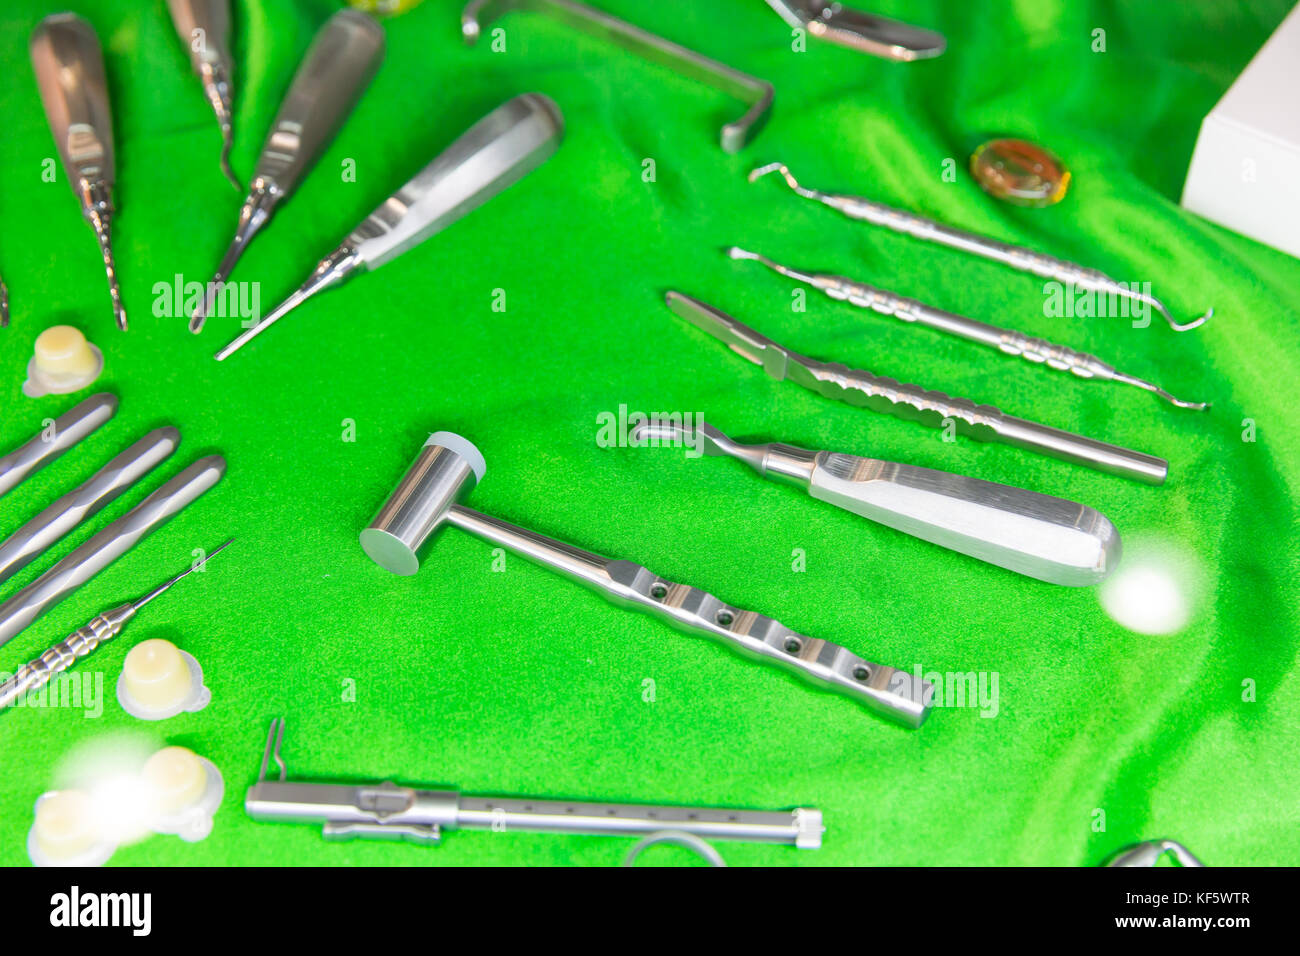 Medicine equipment, dental instrument and tools Stock Photo